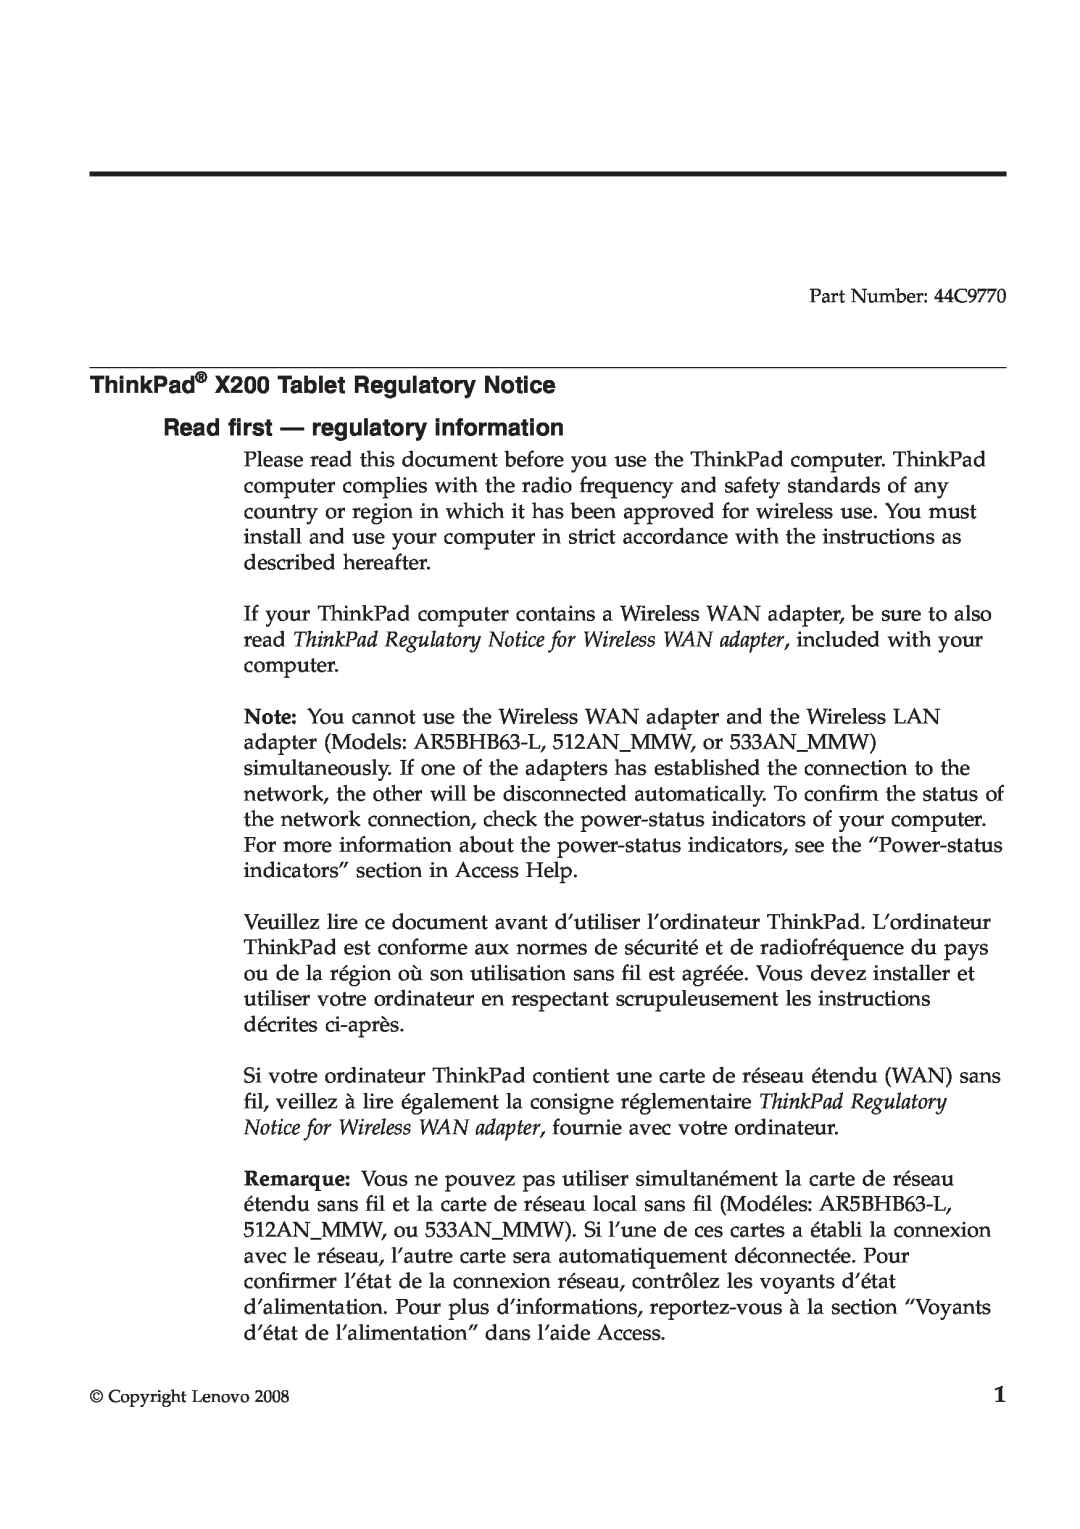 Lenovo manual ThinkPad X200 Tablet Regulatory Notice, Read first - regulatory information, Part Number 44C9770 